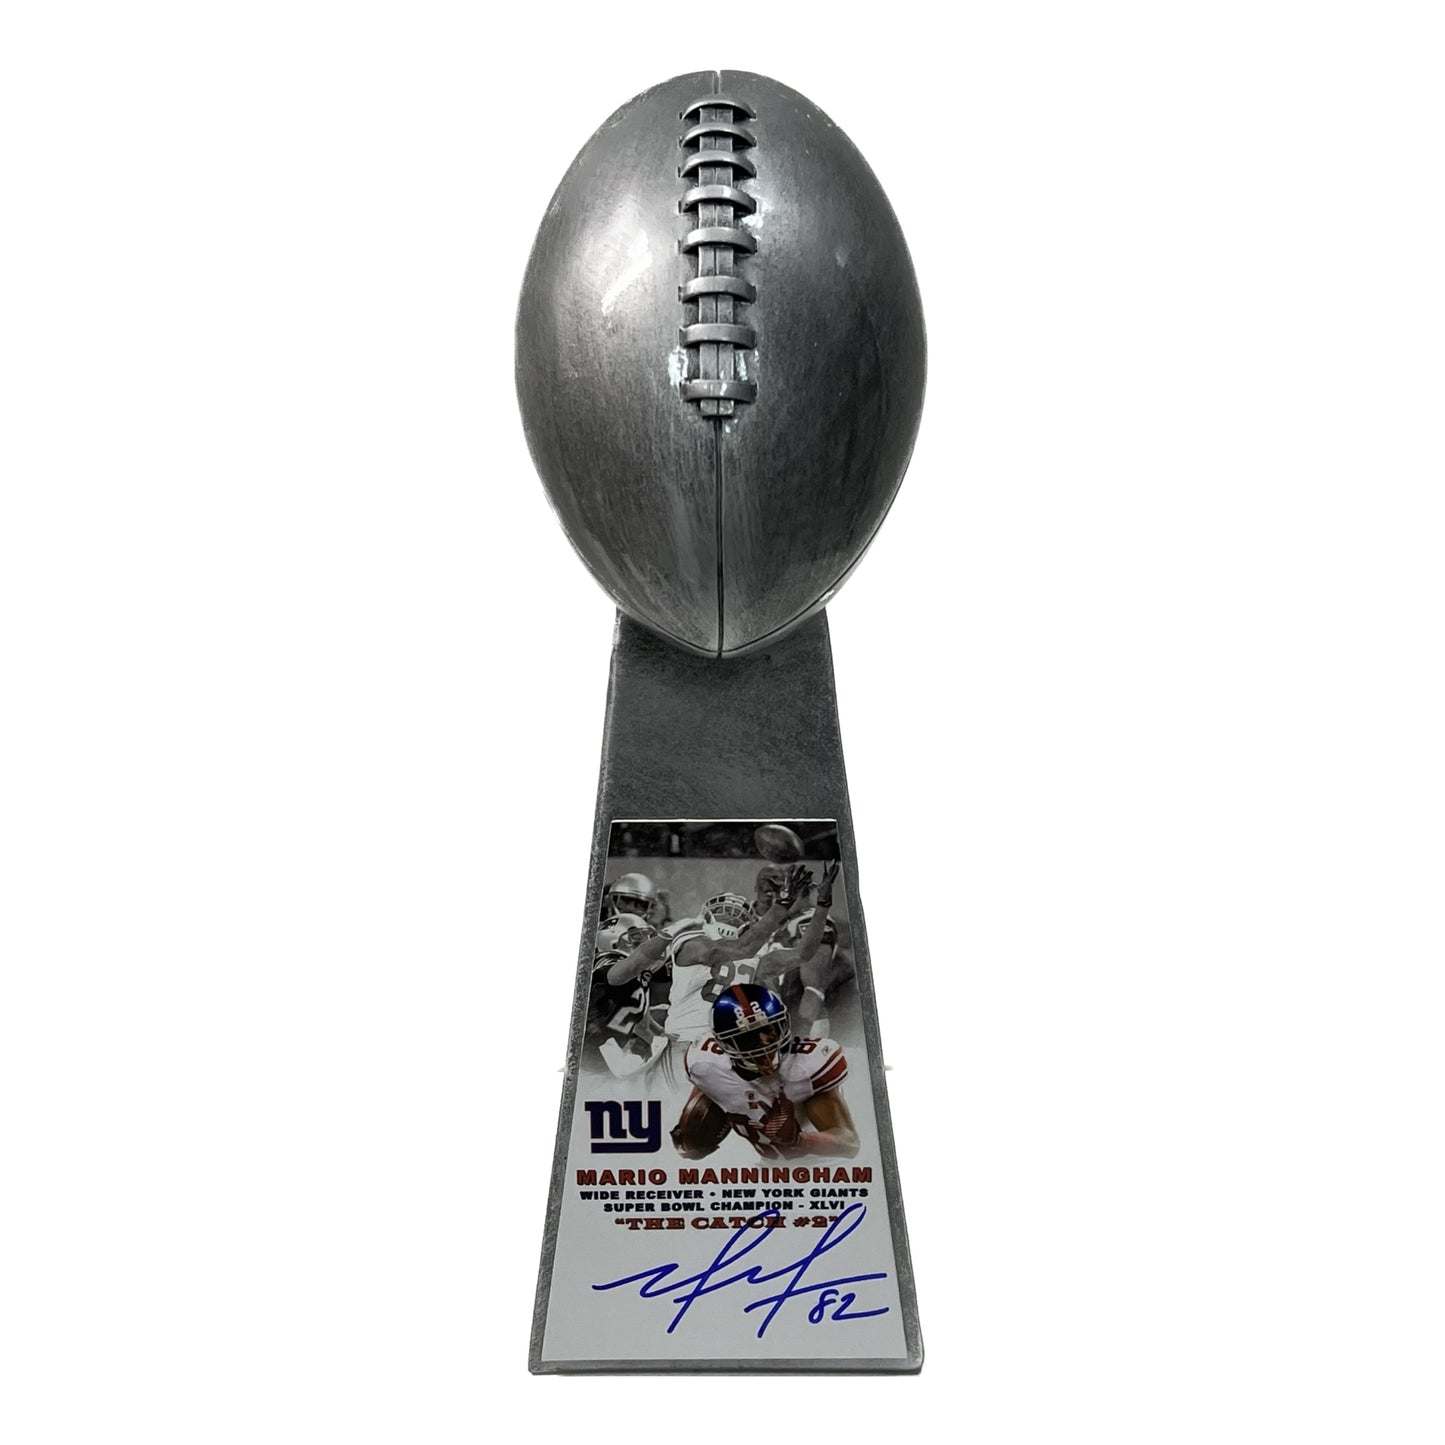 Mario Manningham Autographed New York Giants Super Bowl Replica Trophy Steiner CX